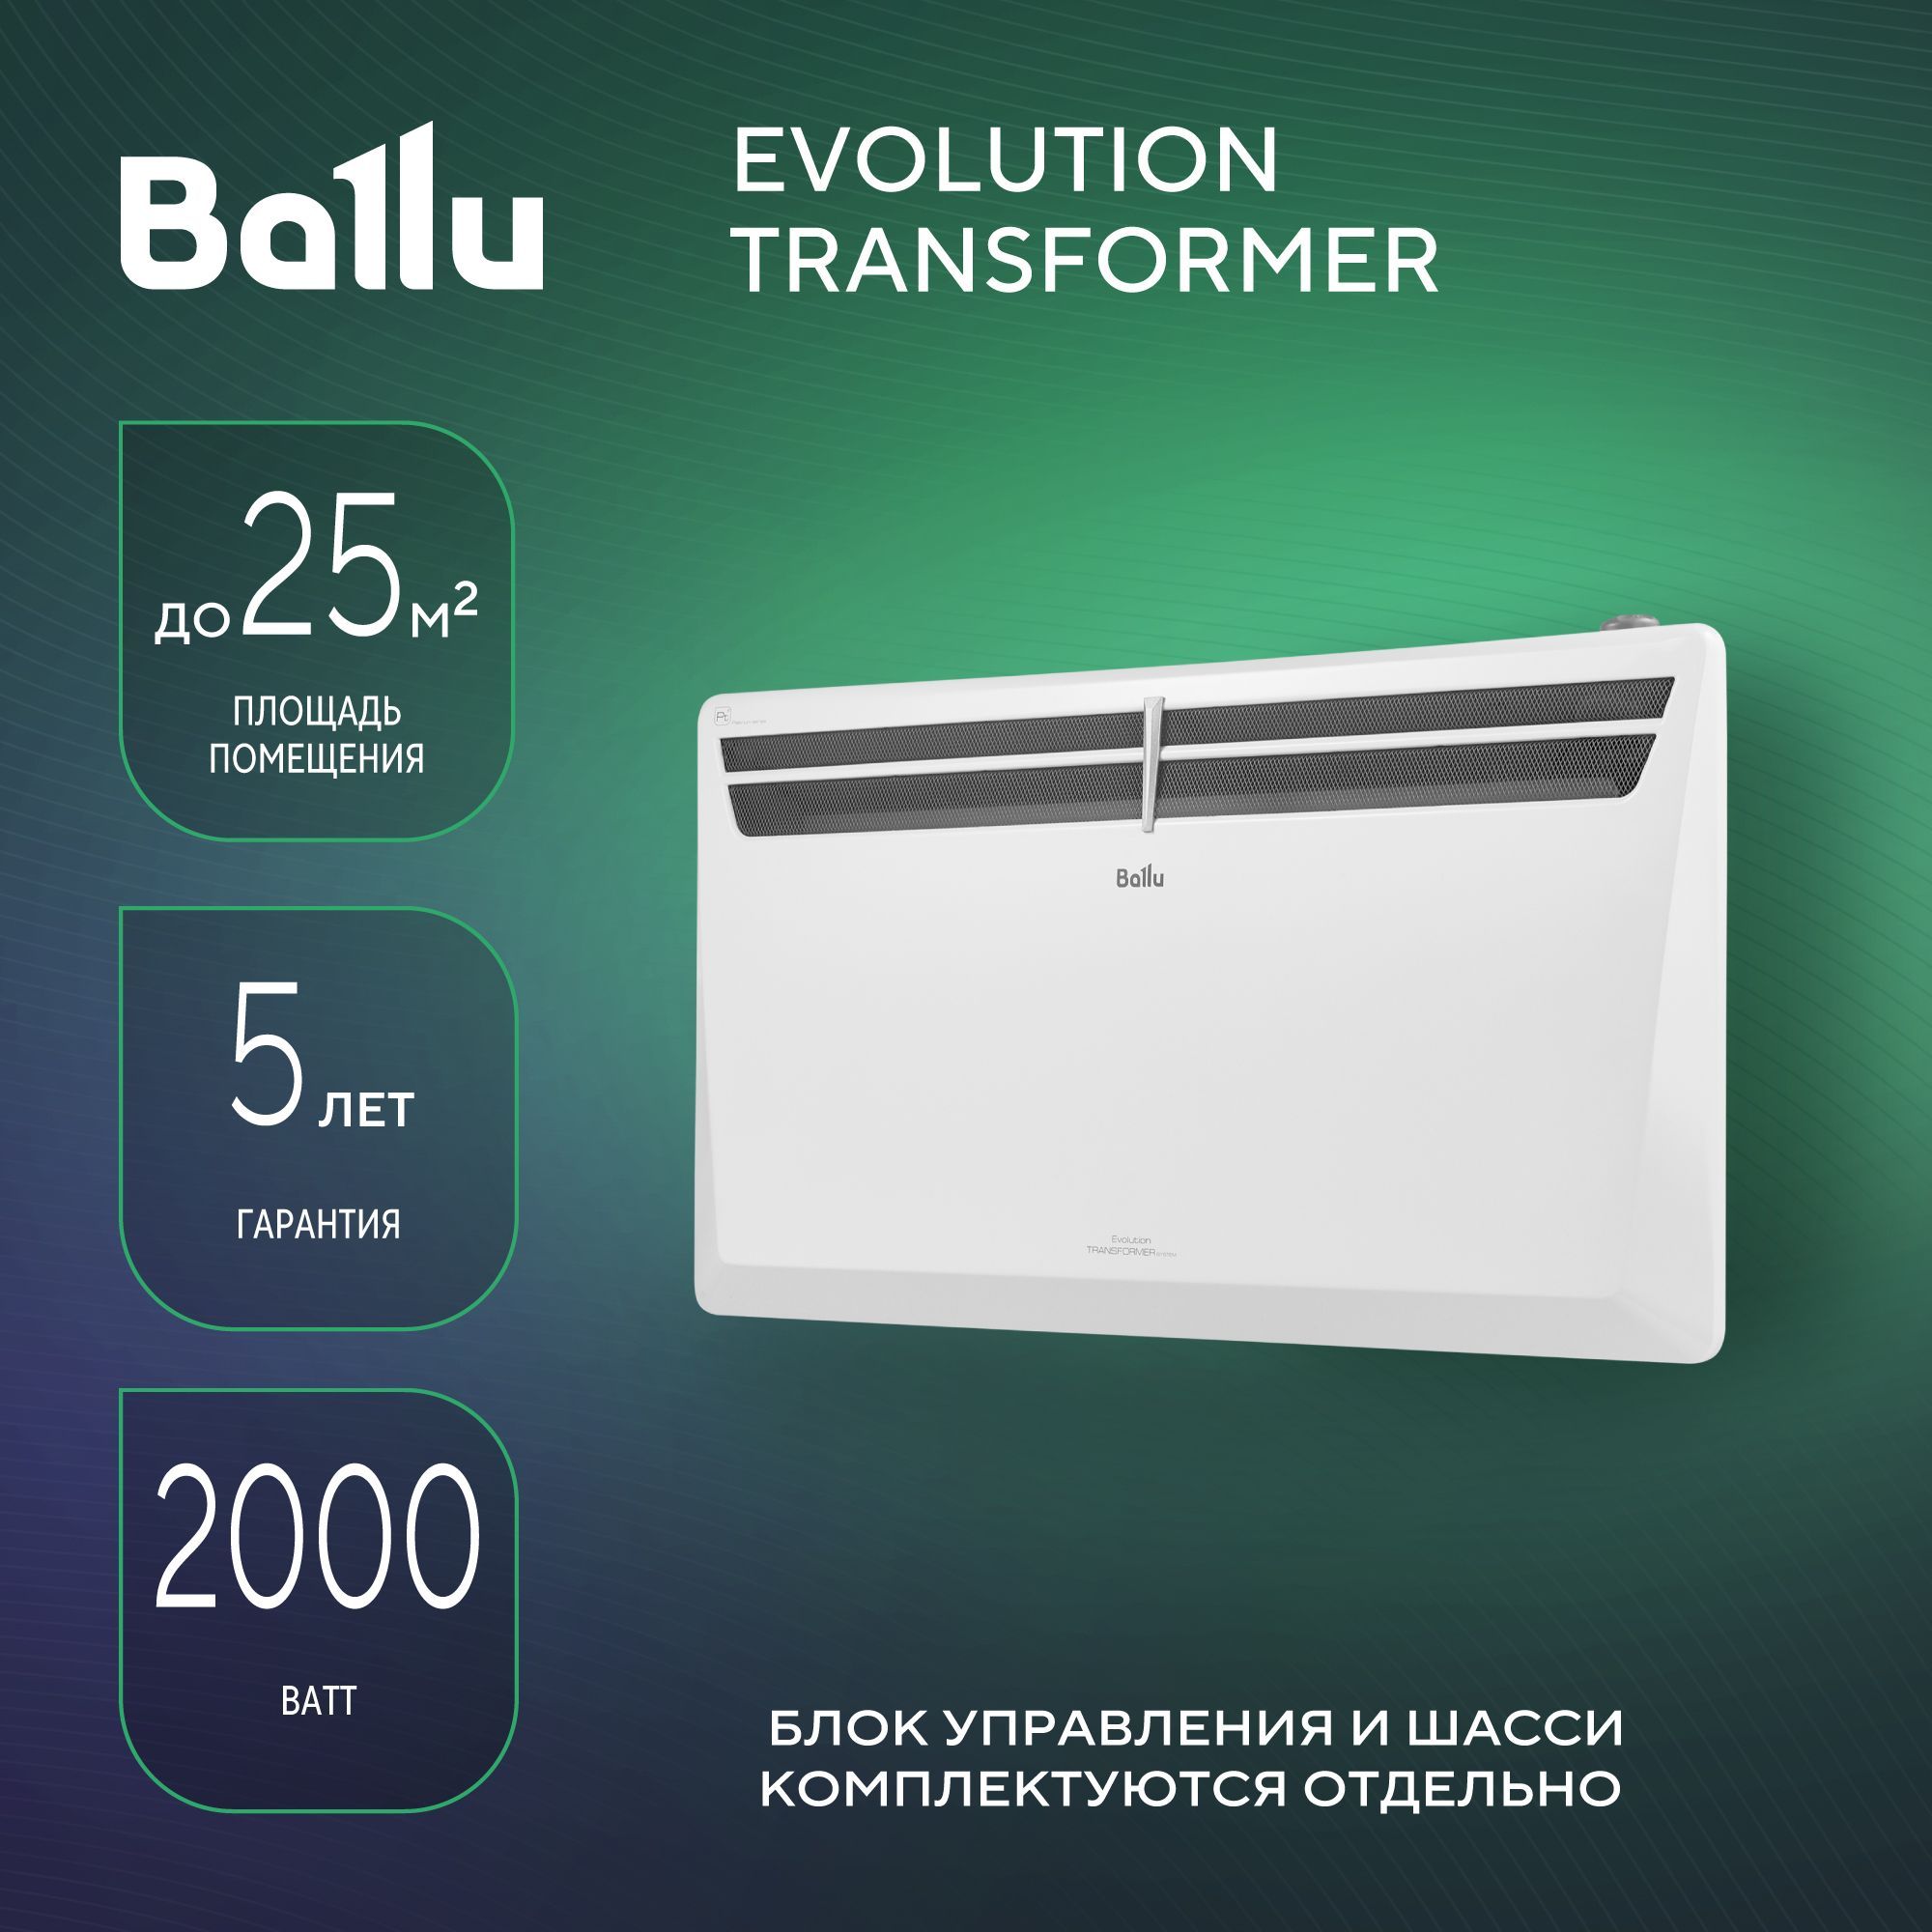 Конвектор Ballu Transformer BEC/EVU-2000. ТЭН для конвектора Ballu 2000w. Ballu 2000 отзывы. Конвекторы ballu evolution transformer